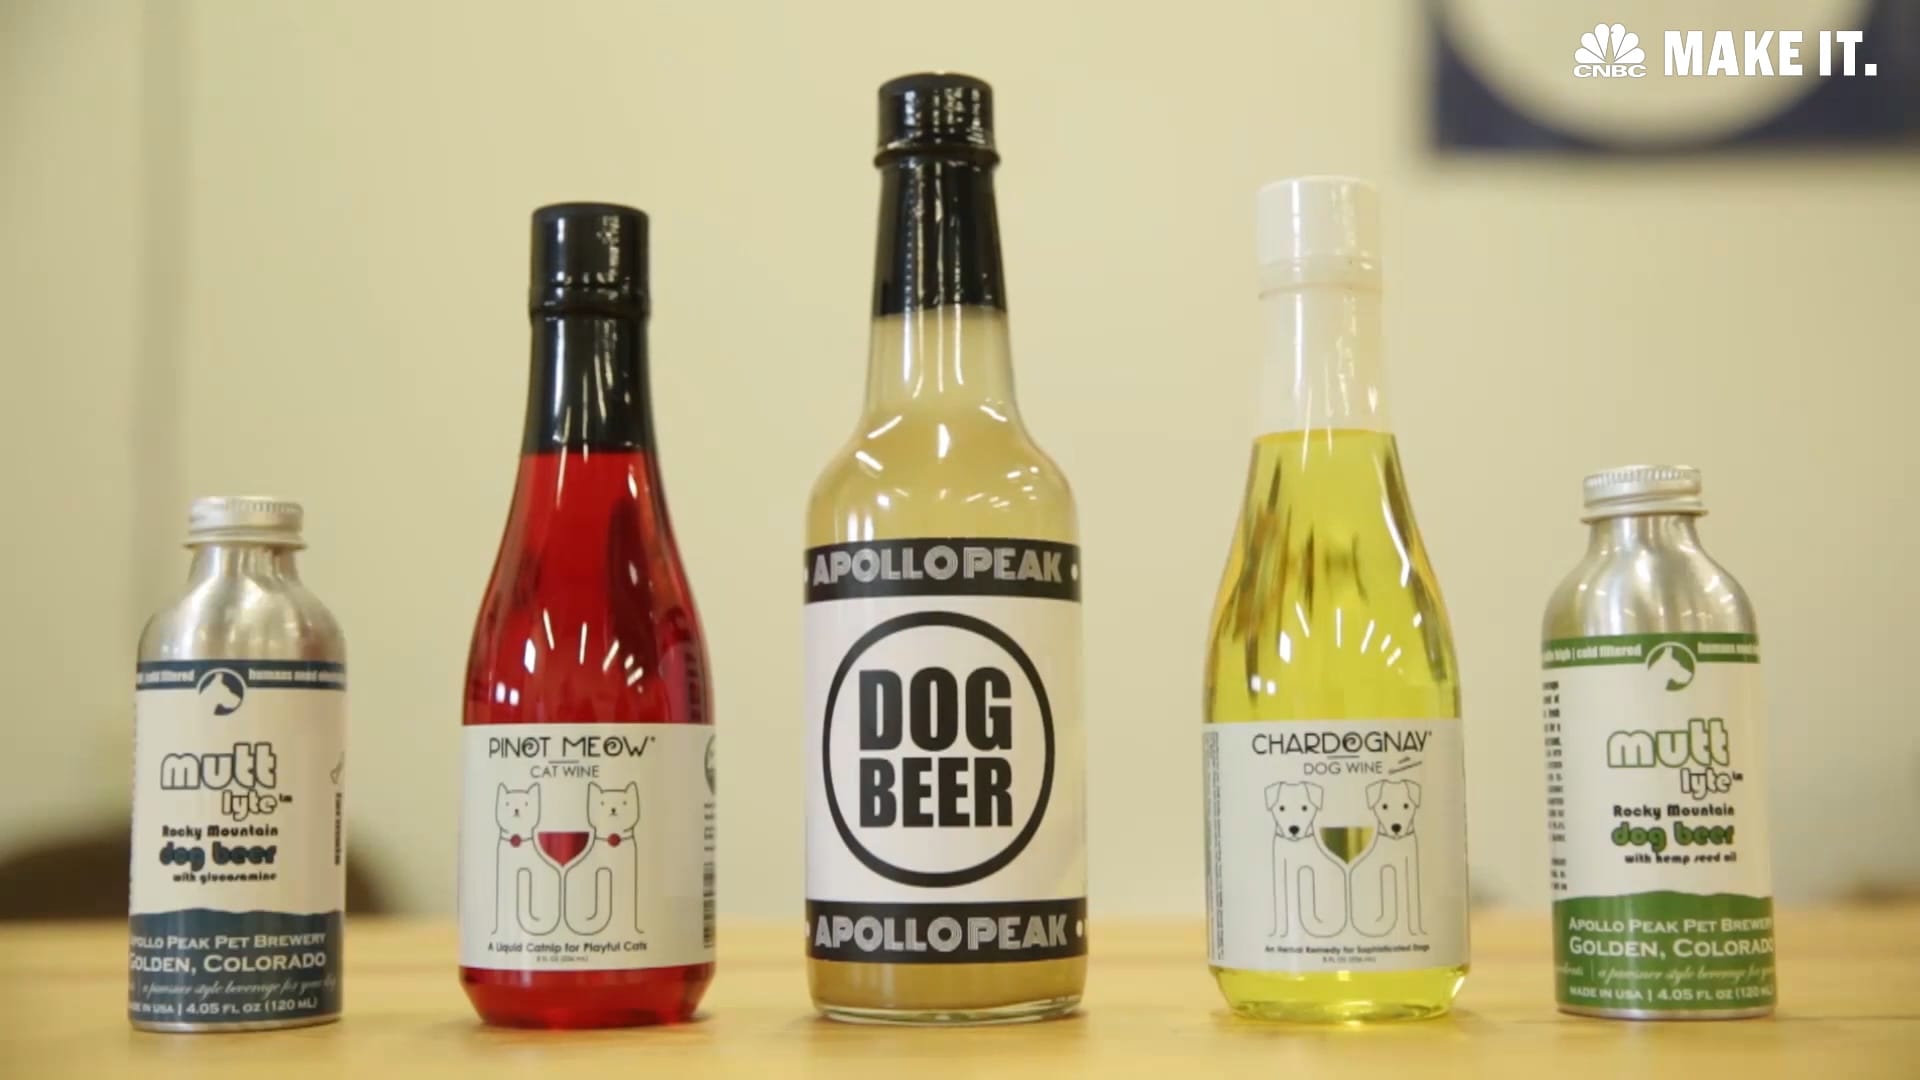 Apollo Peak sells cat wine and dog beer